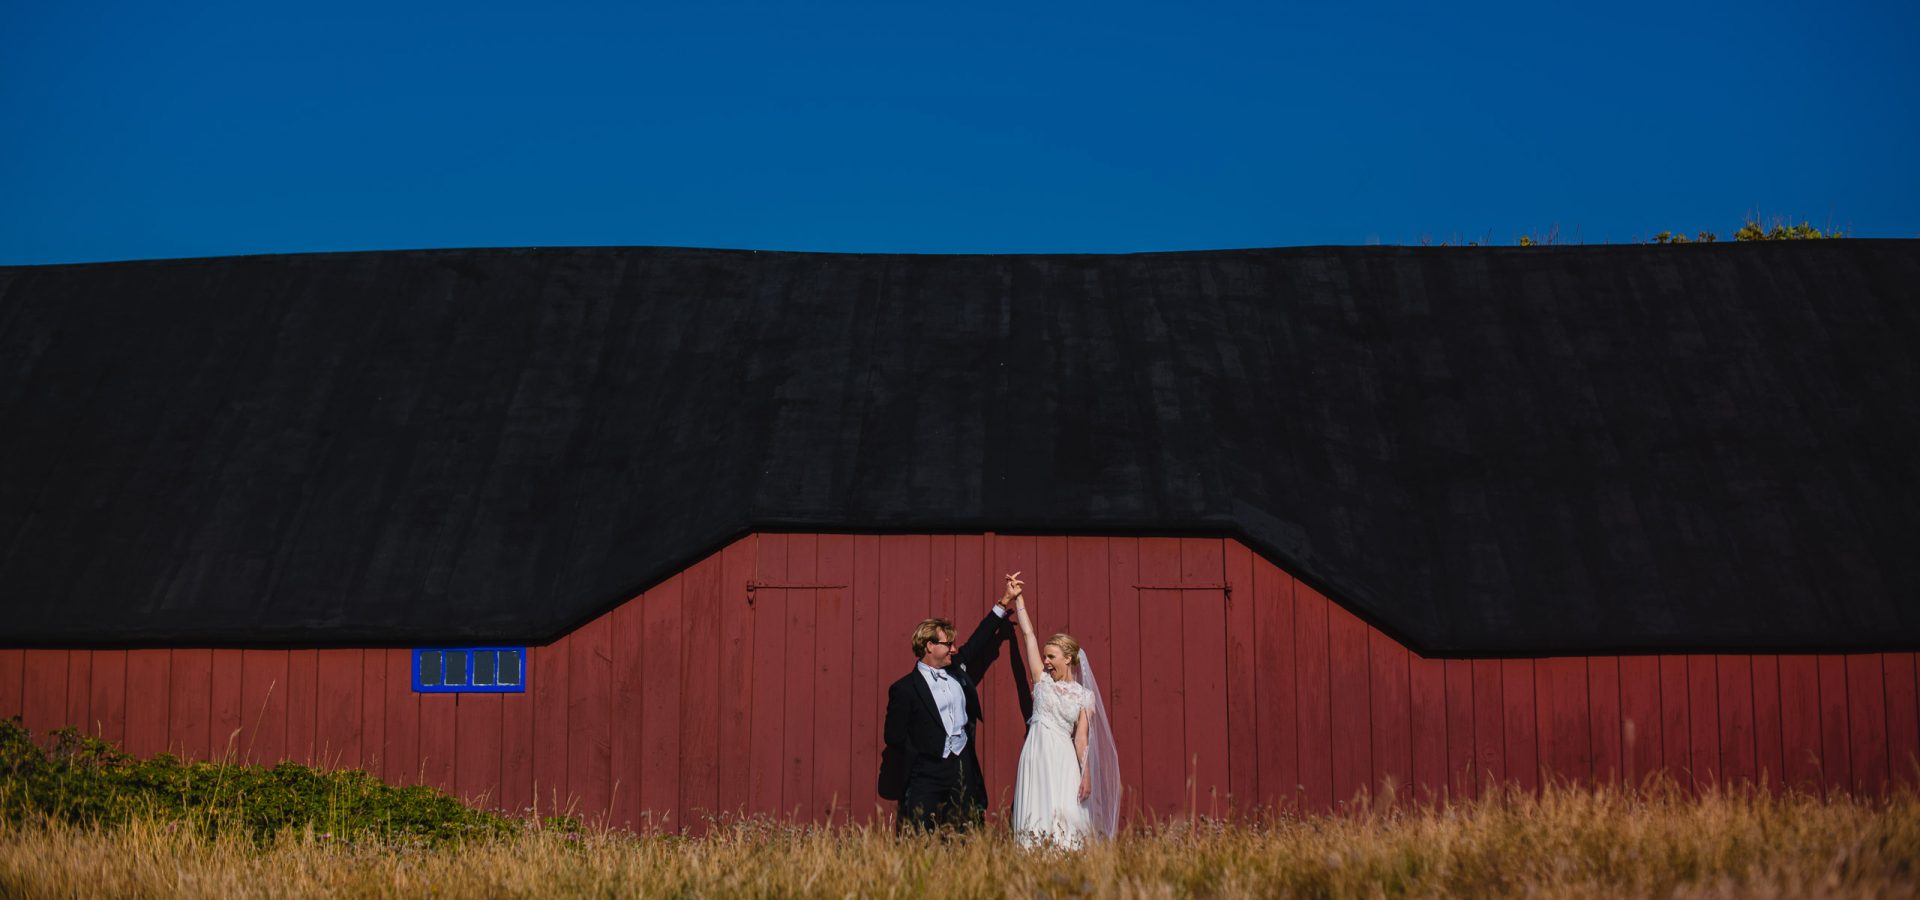 wedding photography blog - real weddings